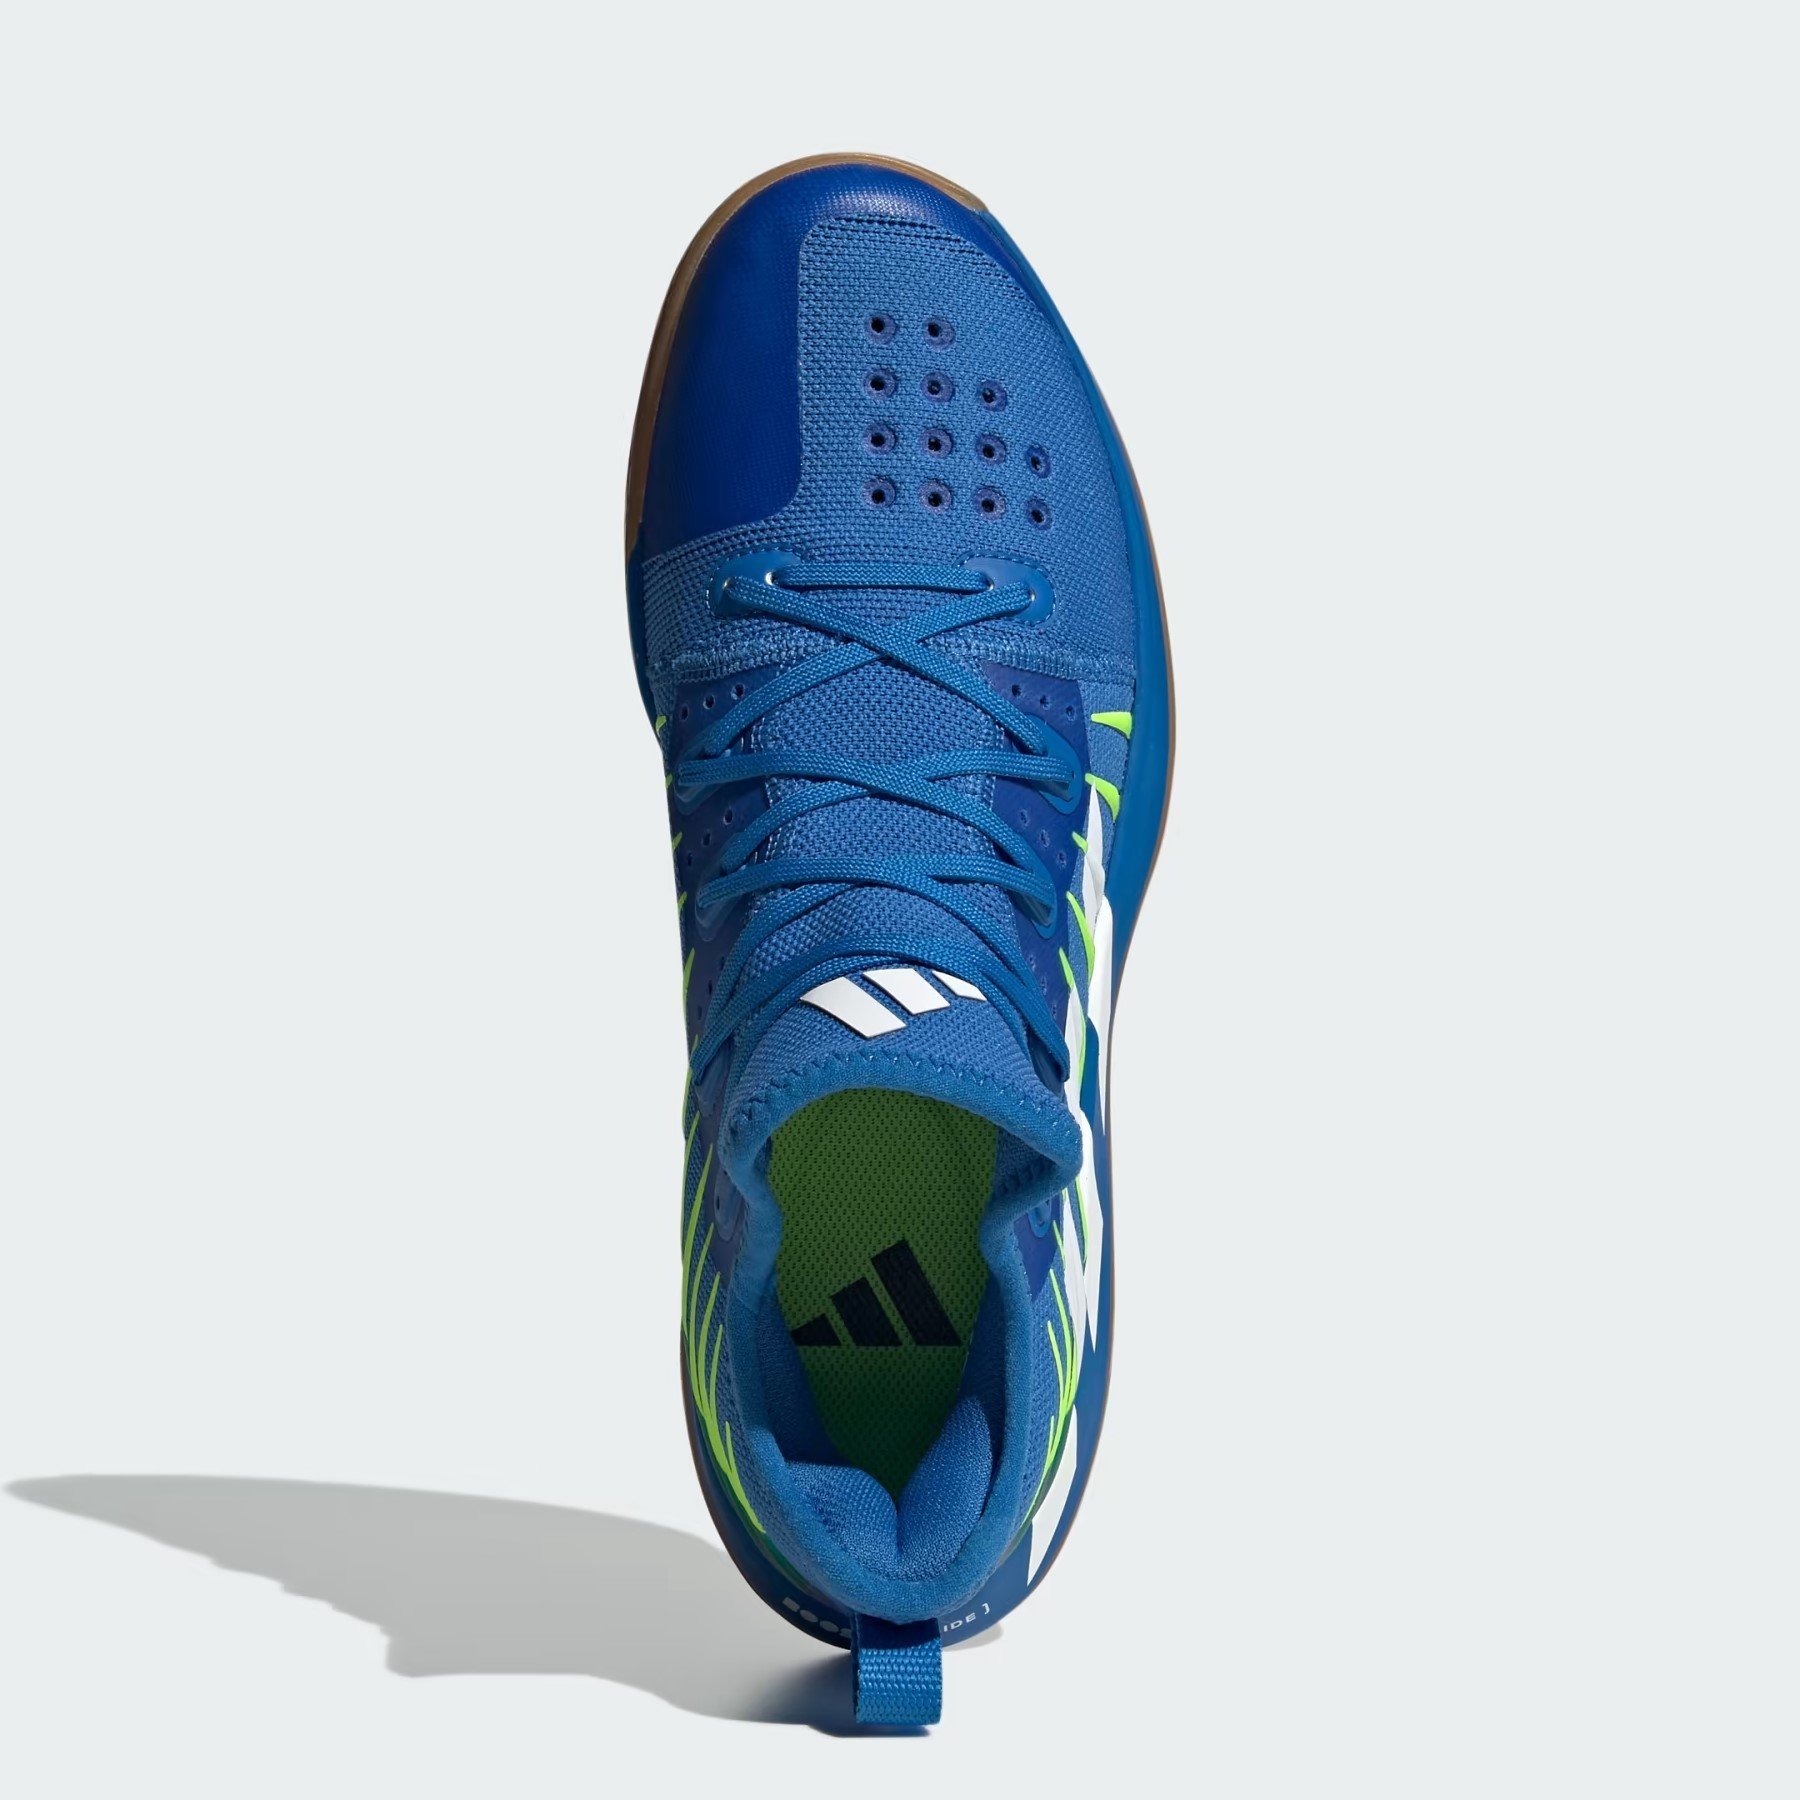 Obuv Adidas Stabil Next Gen M - modrá/biela/zelená